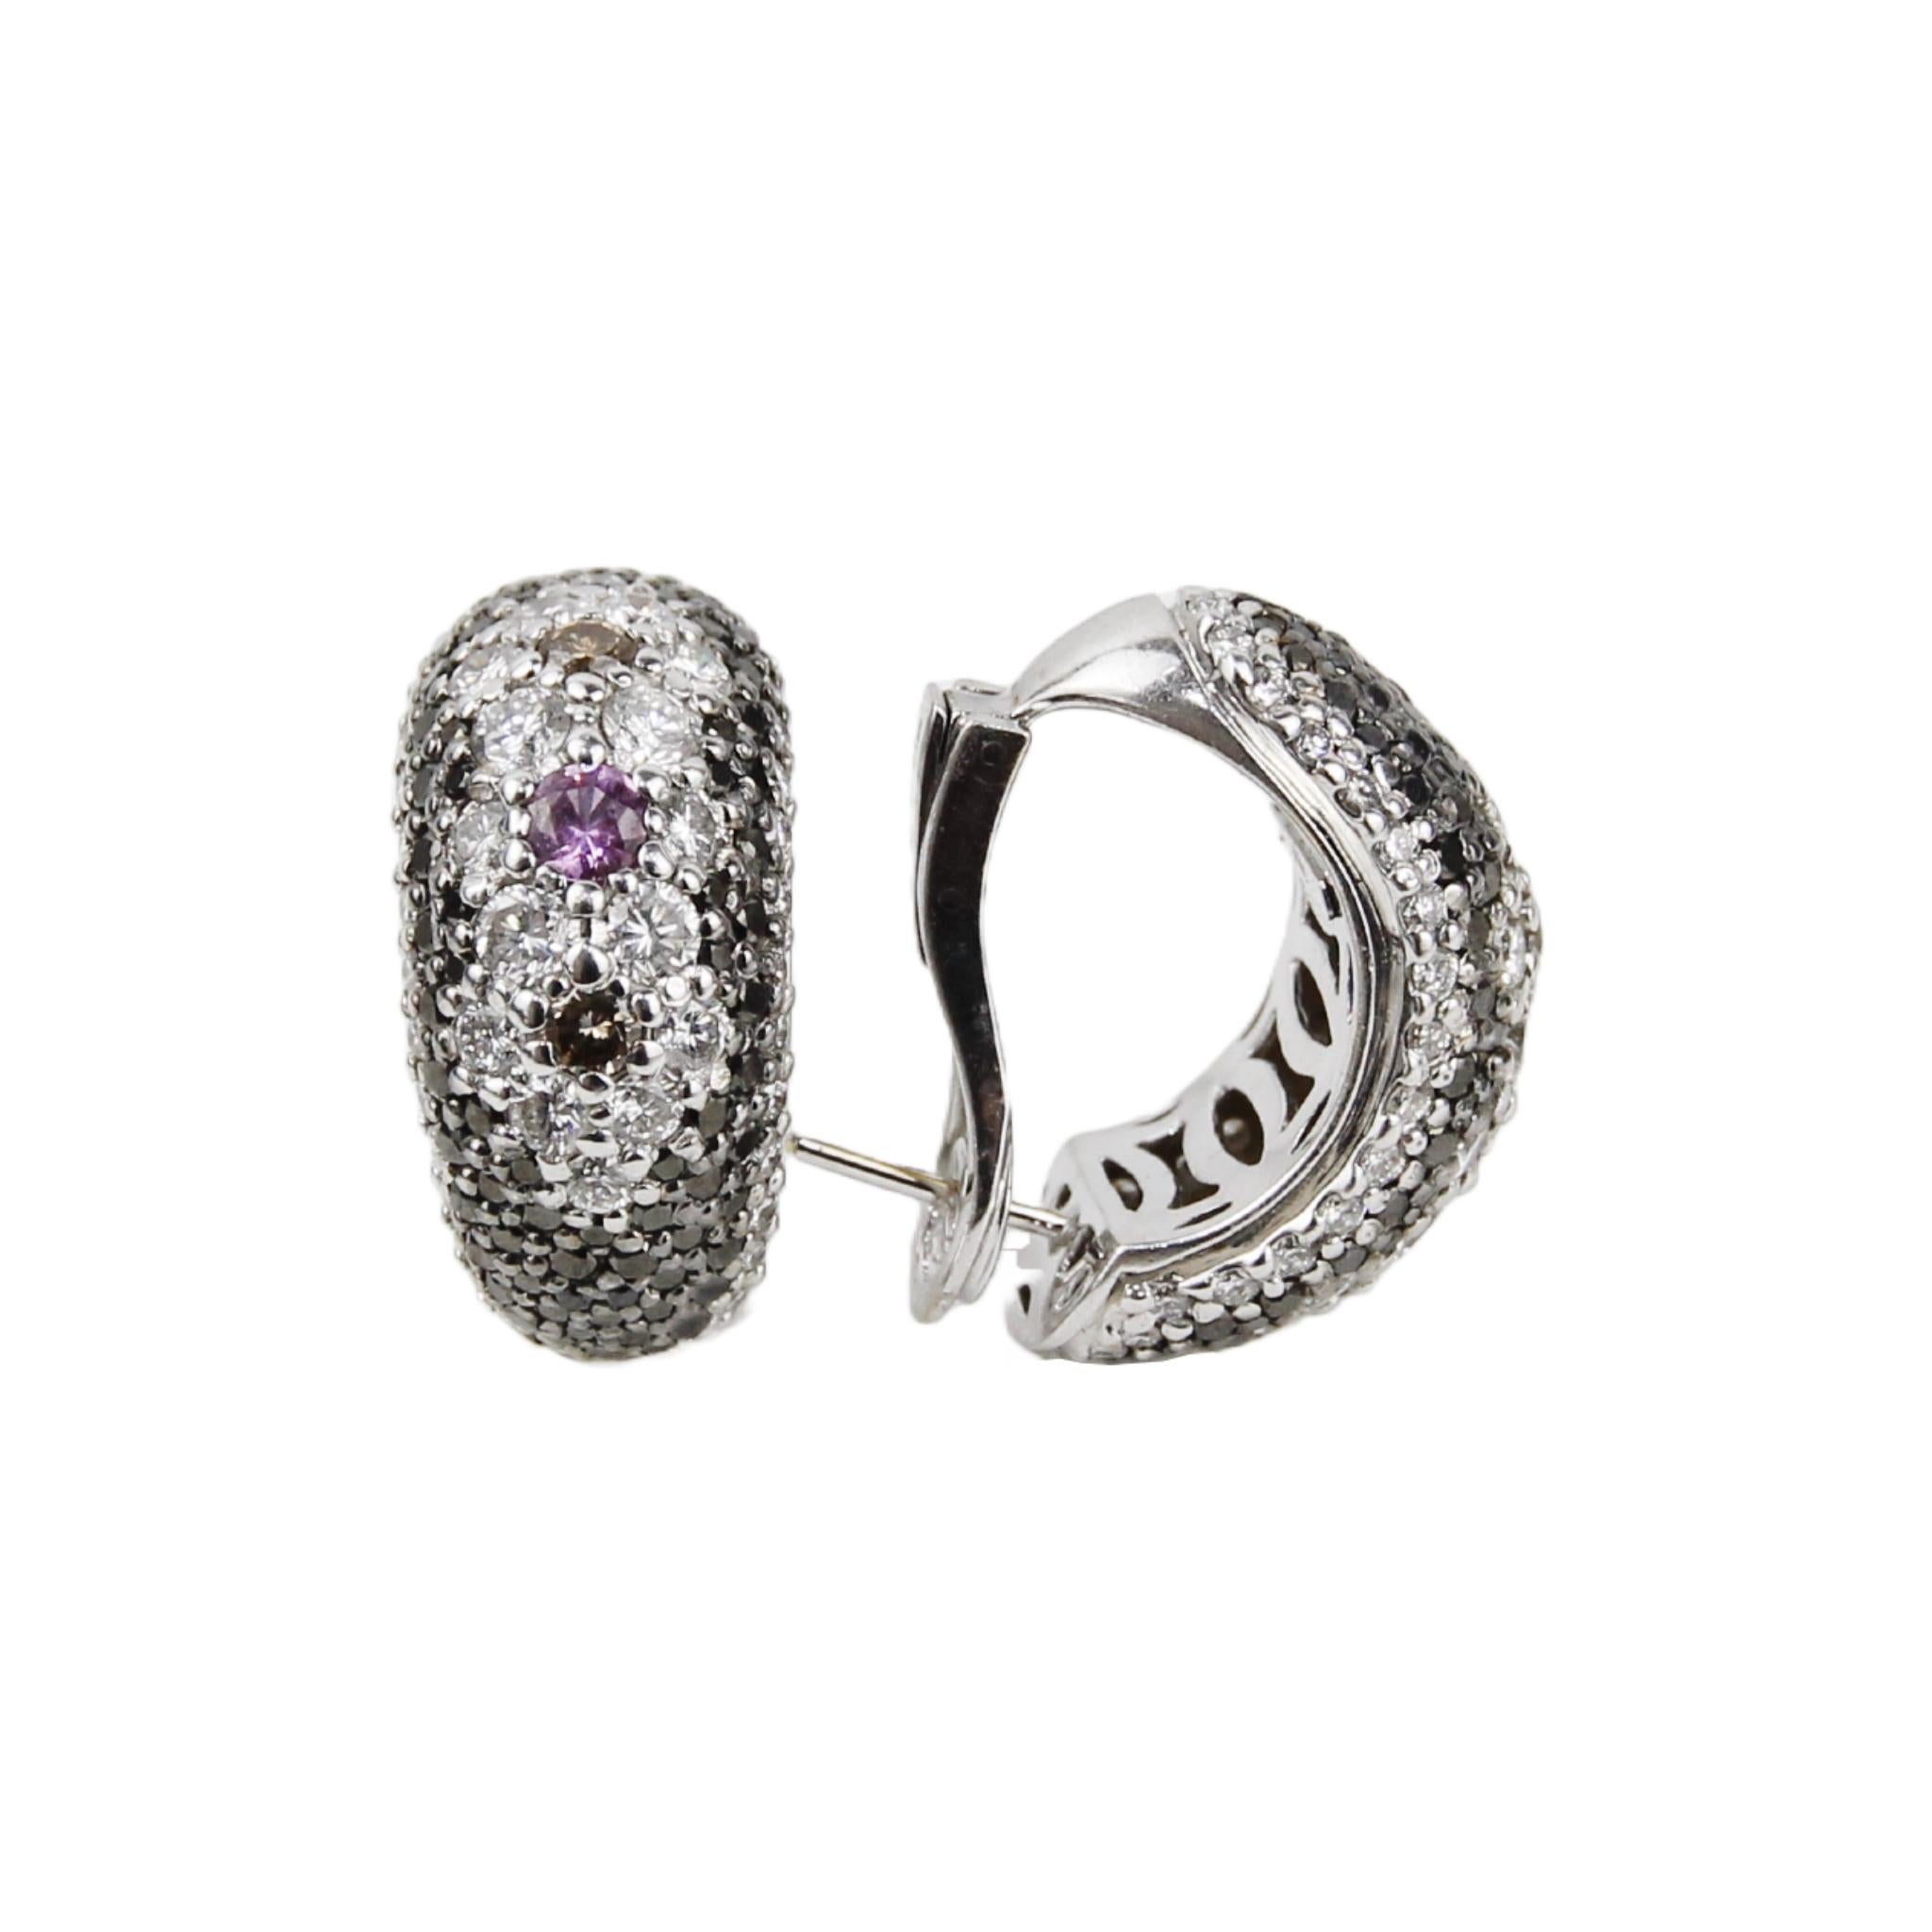 Alex Soldier Diamond&Sapphire Earrings
Diamond: 6.20ctw
Black Diamond: 2.60ct
Pink Sapphire: 1.00ctw
Retail price: $30,000.00